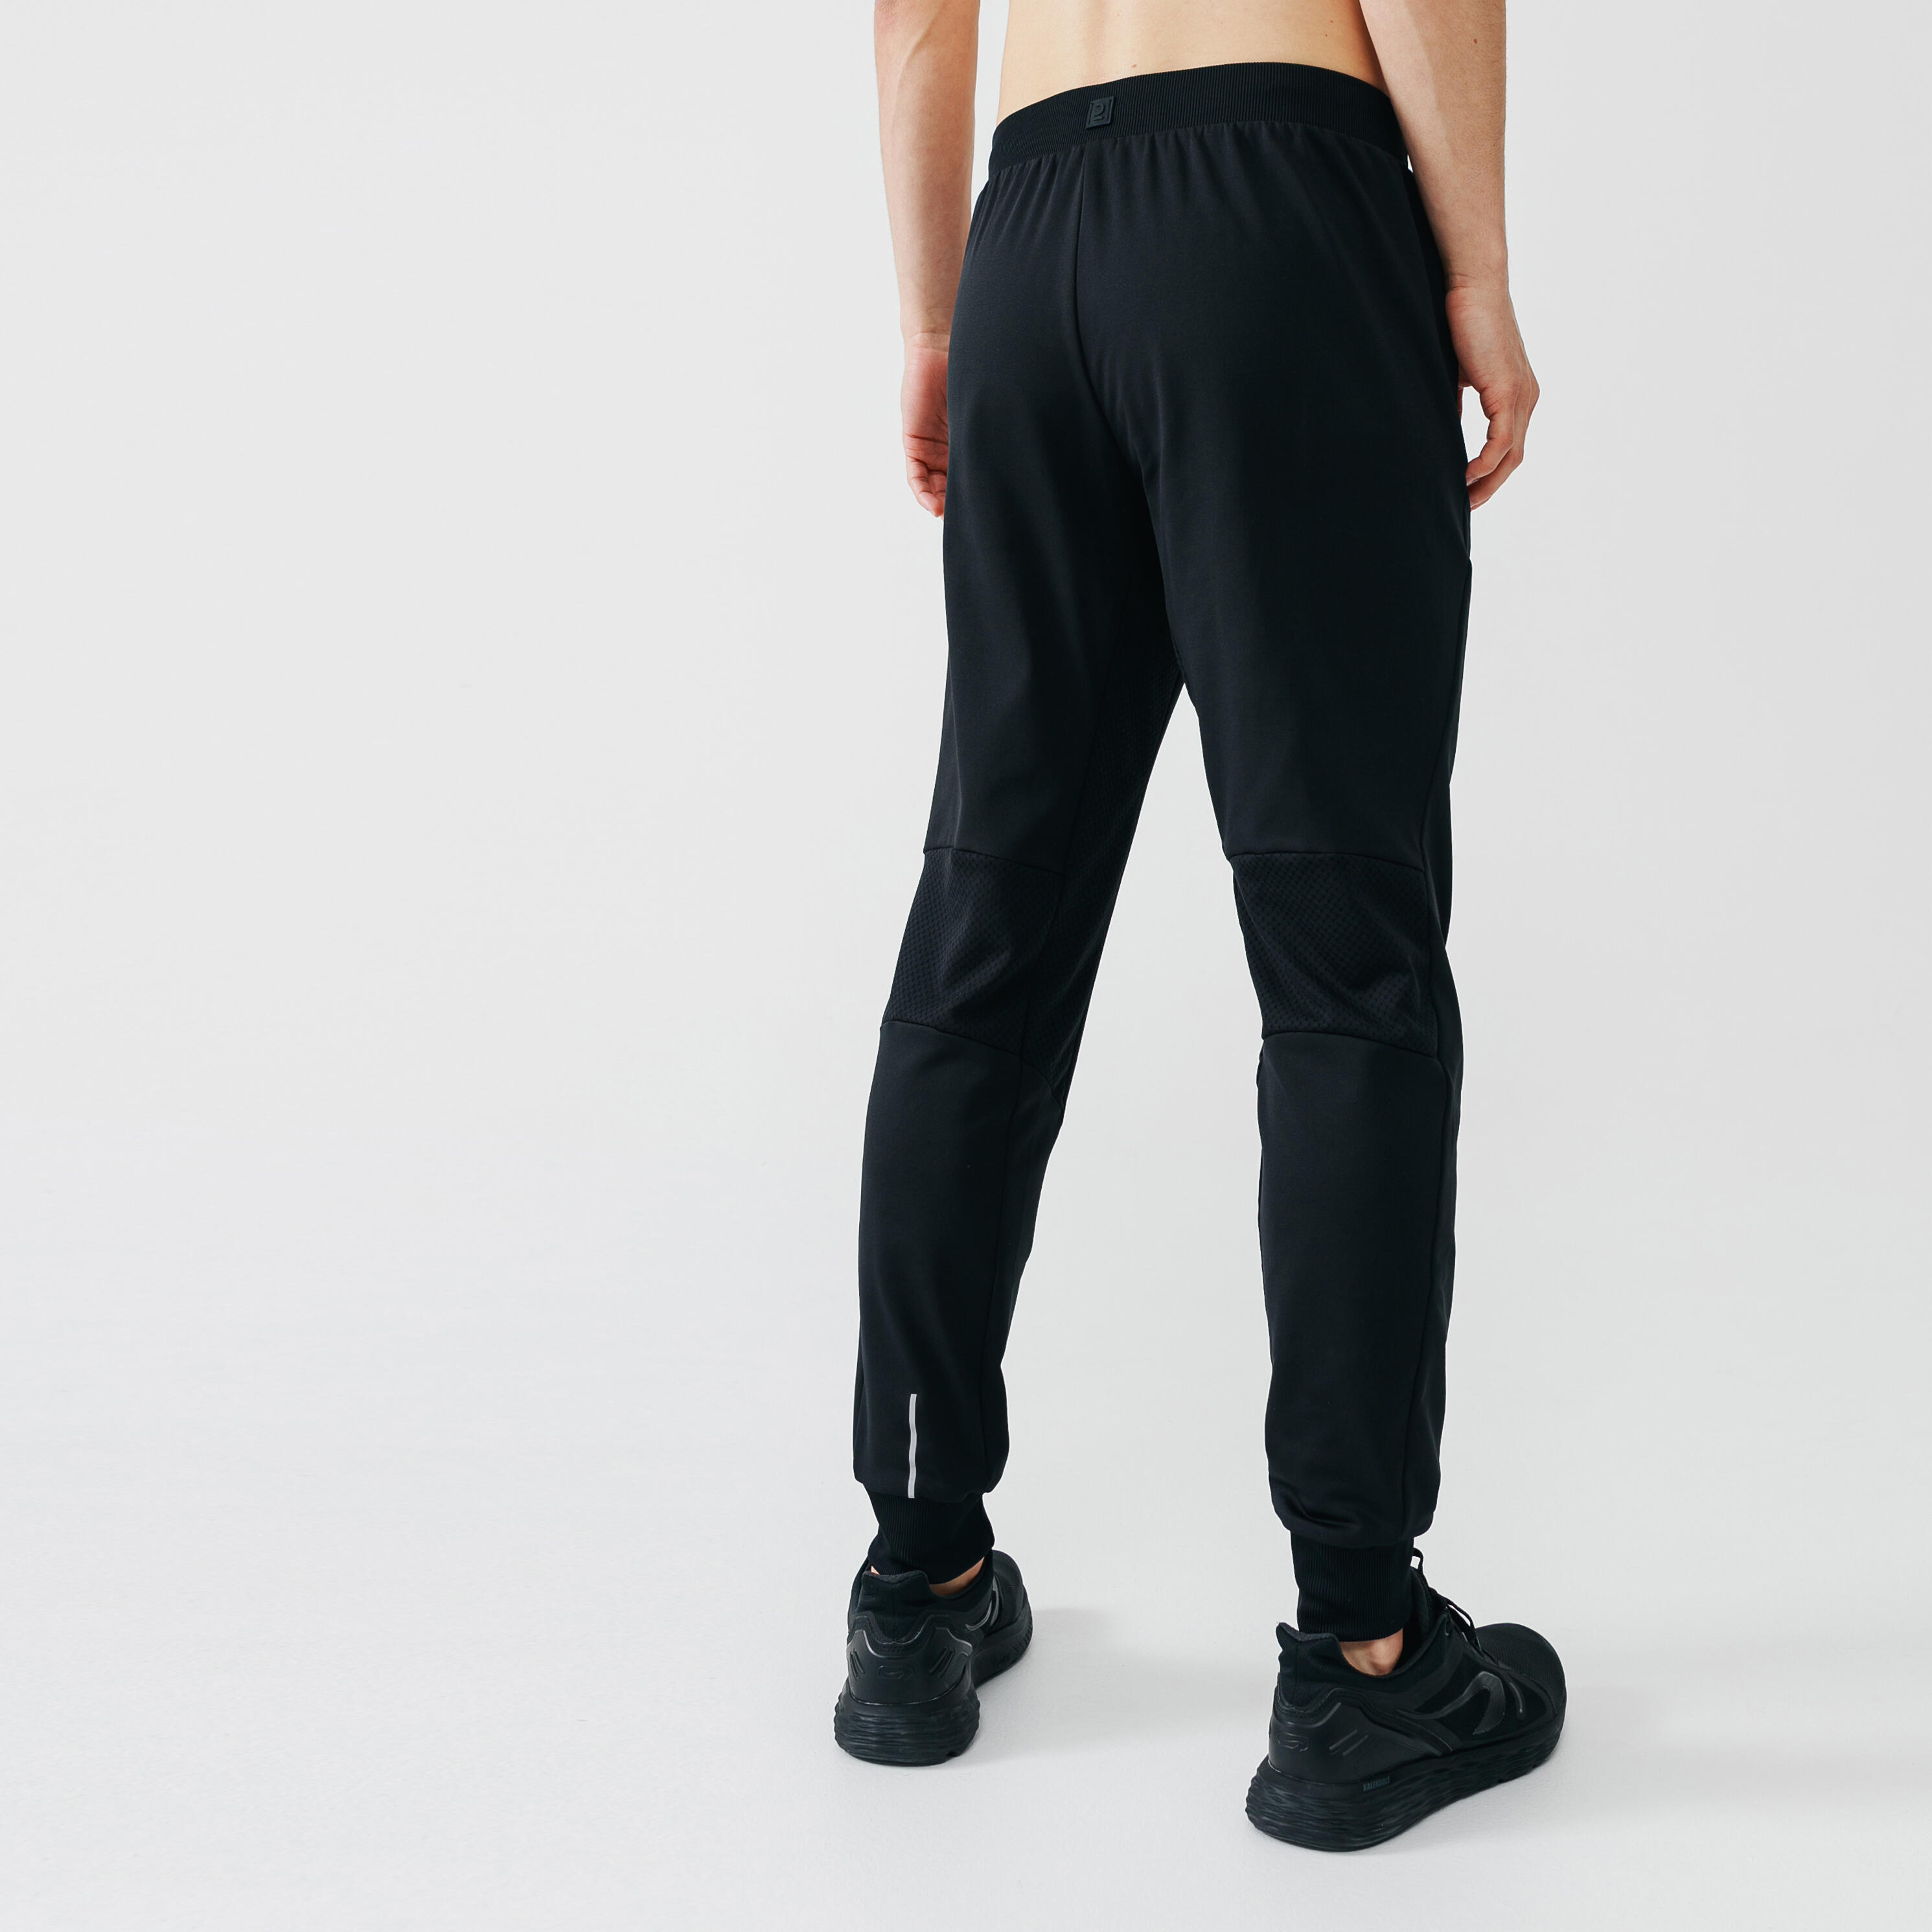 Men's Warm+ Running Trousers - Black